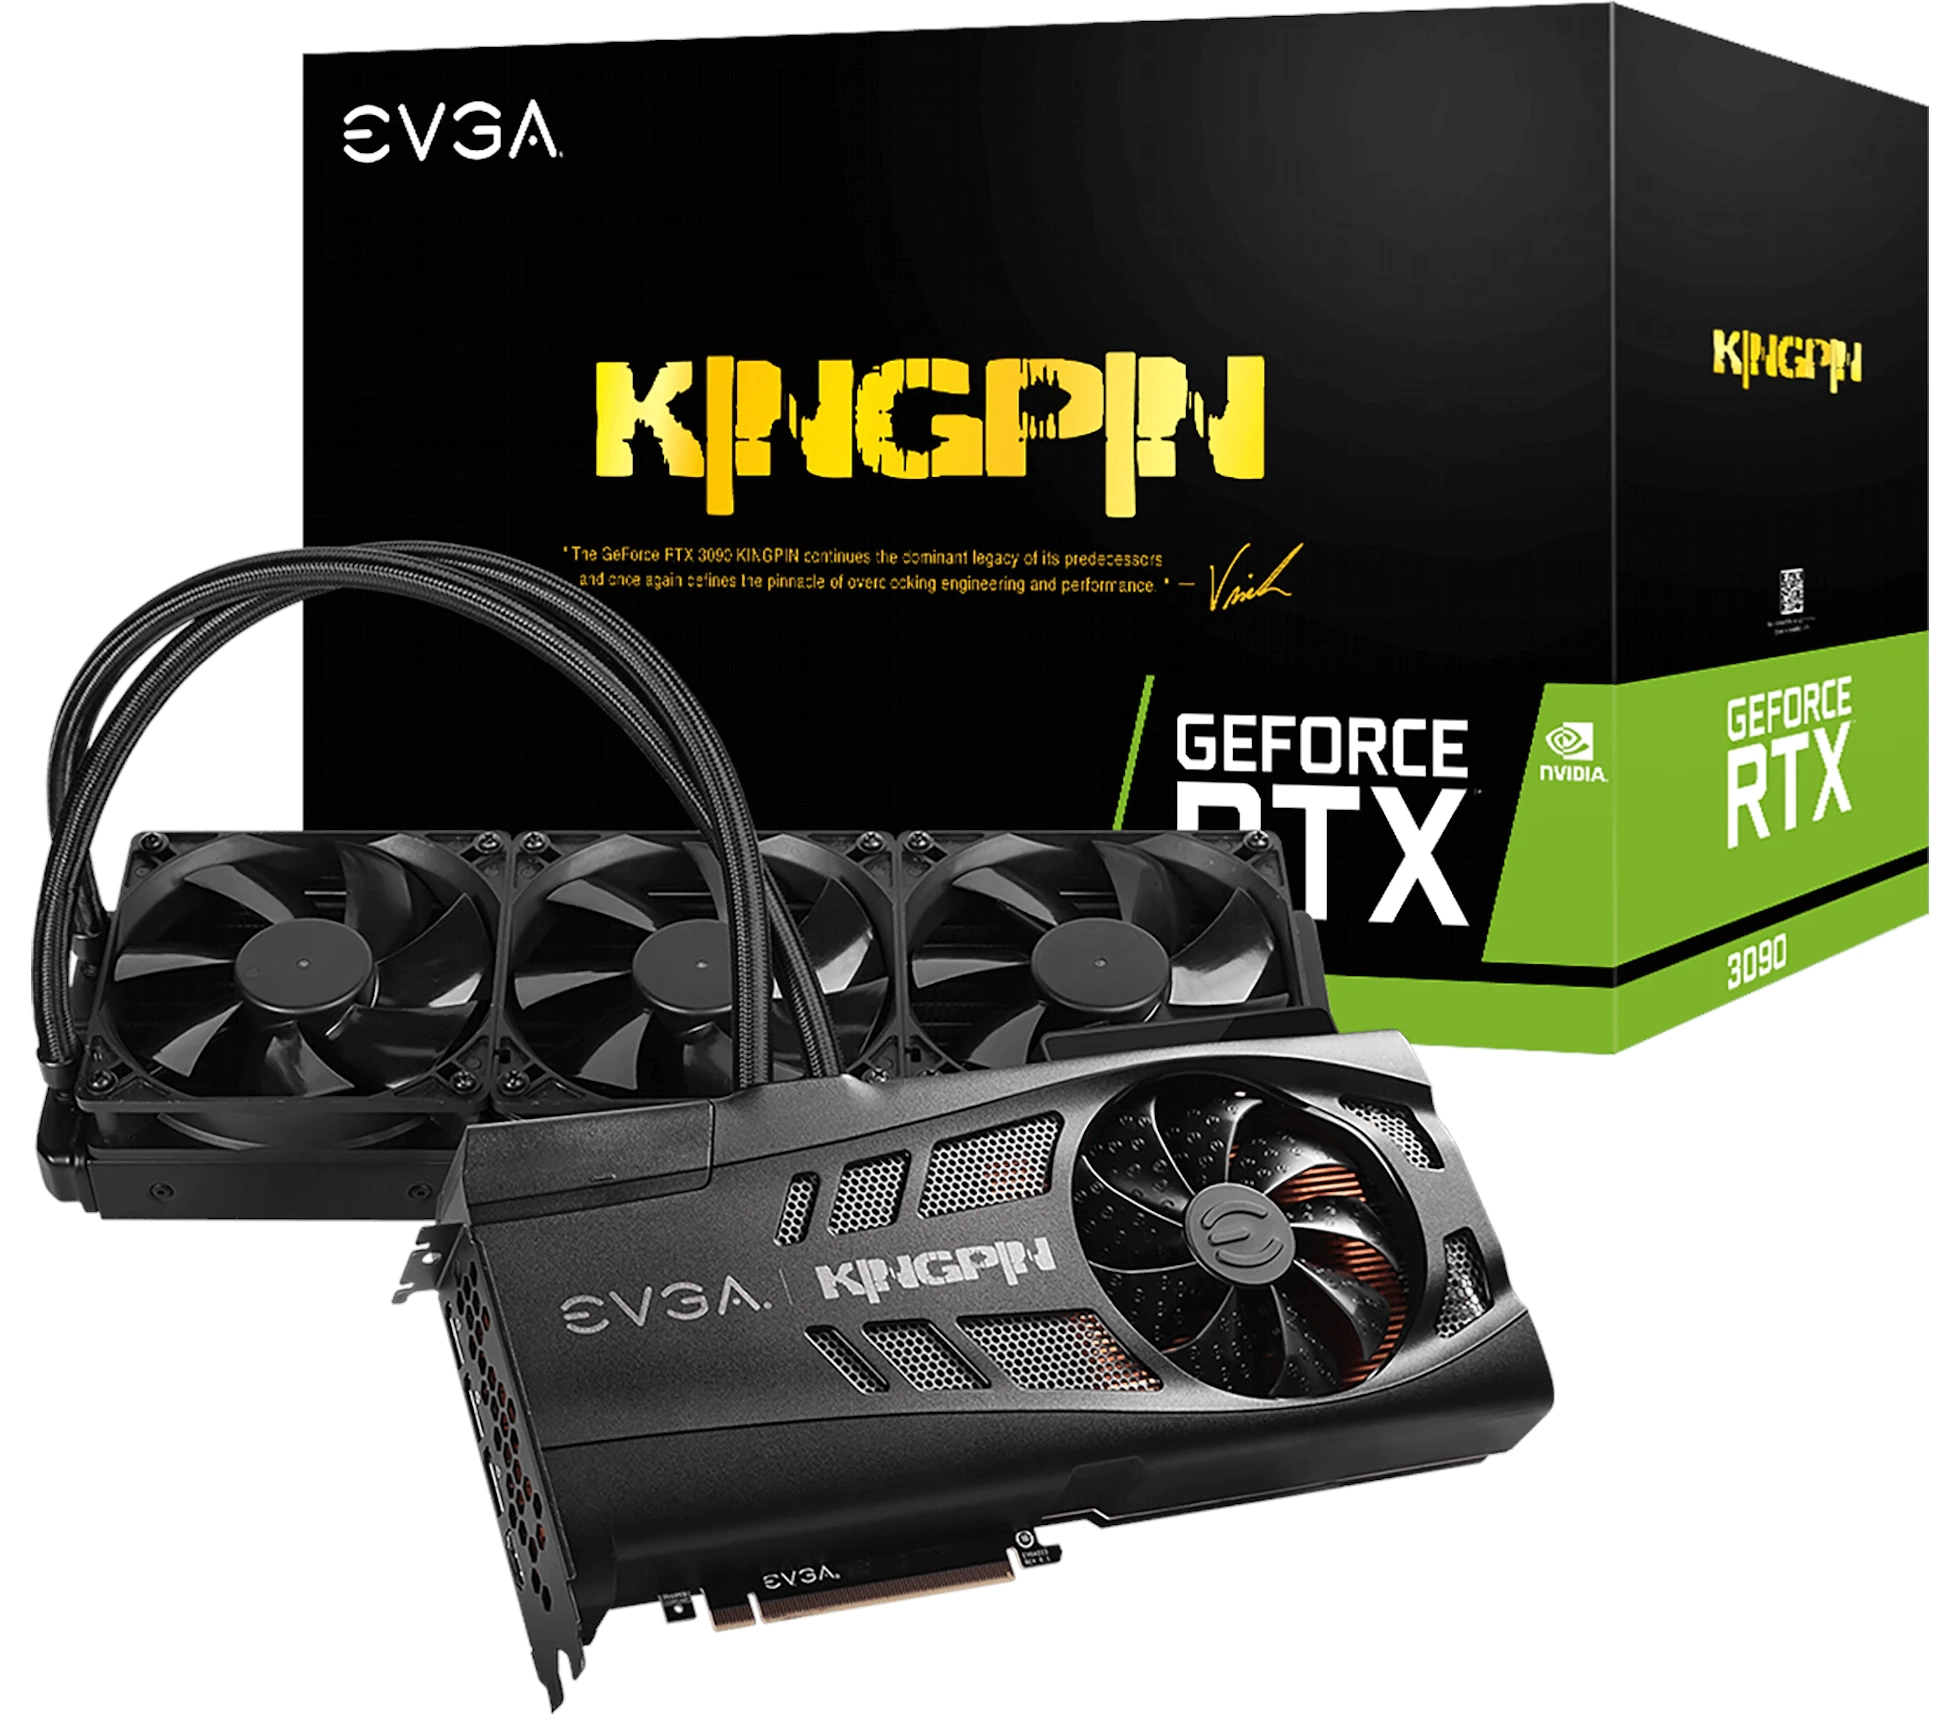 EVGA GeForce RTX 3090 KINGPIN Package